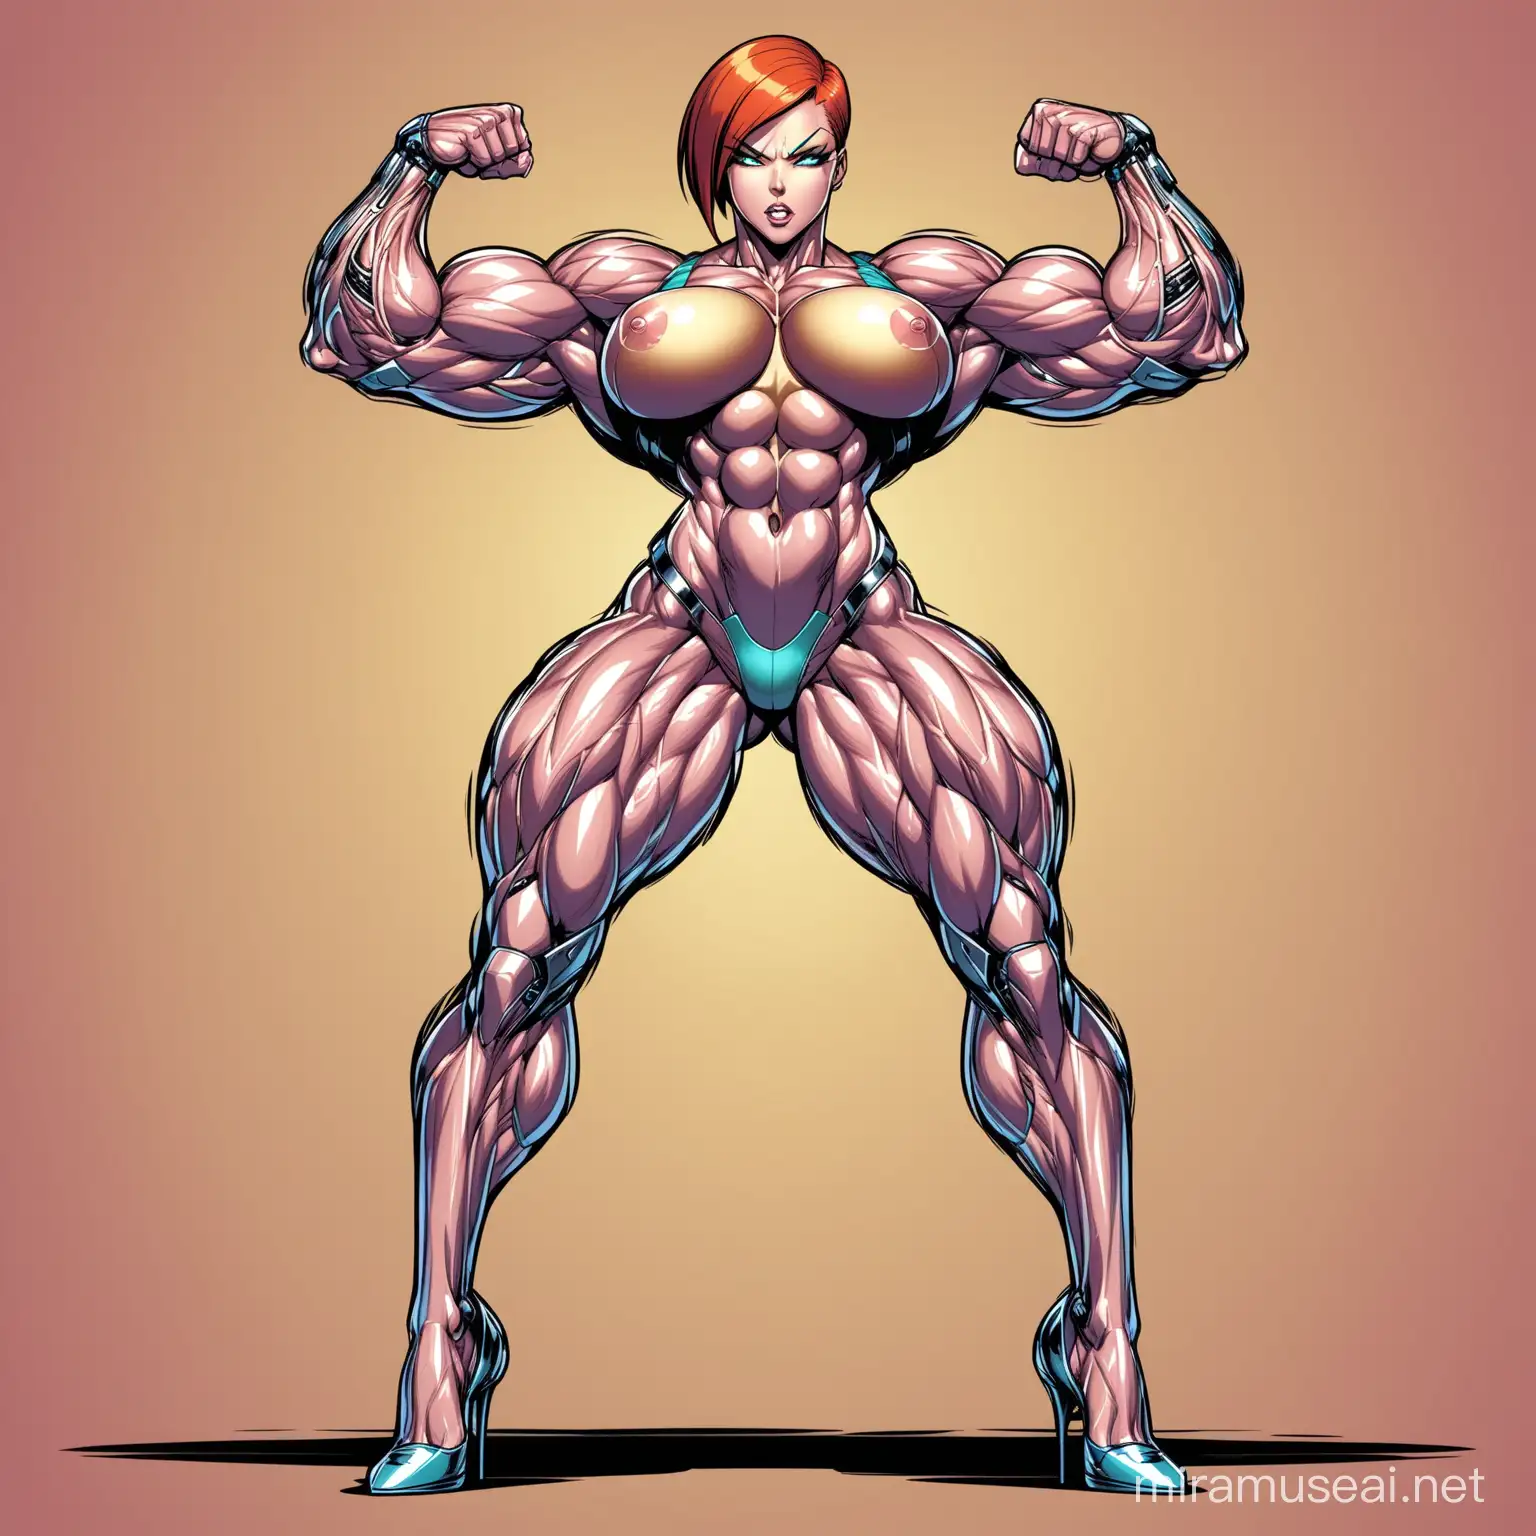 Muscular Female Cyborg Flexing Biceps in Comic Style